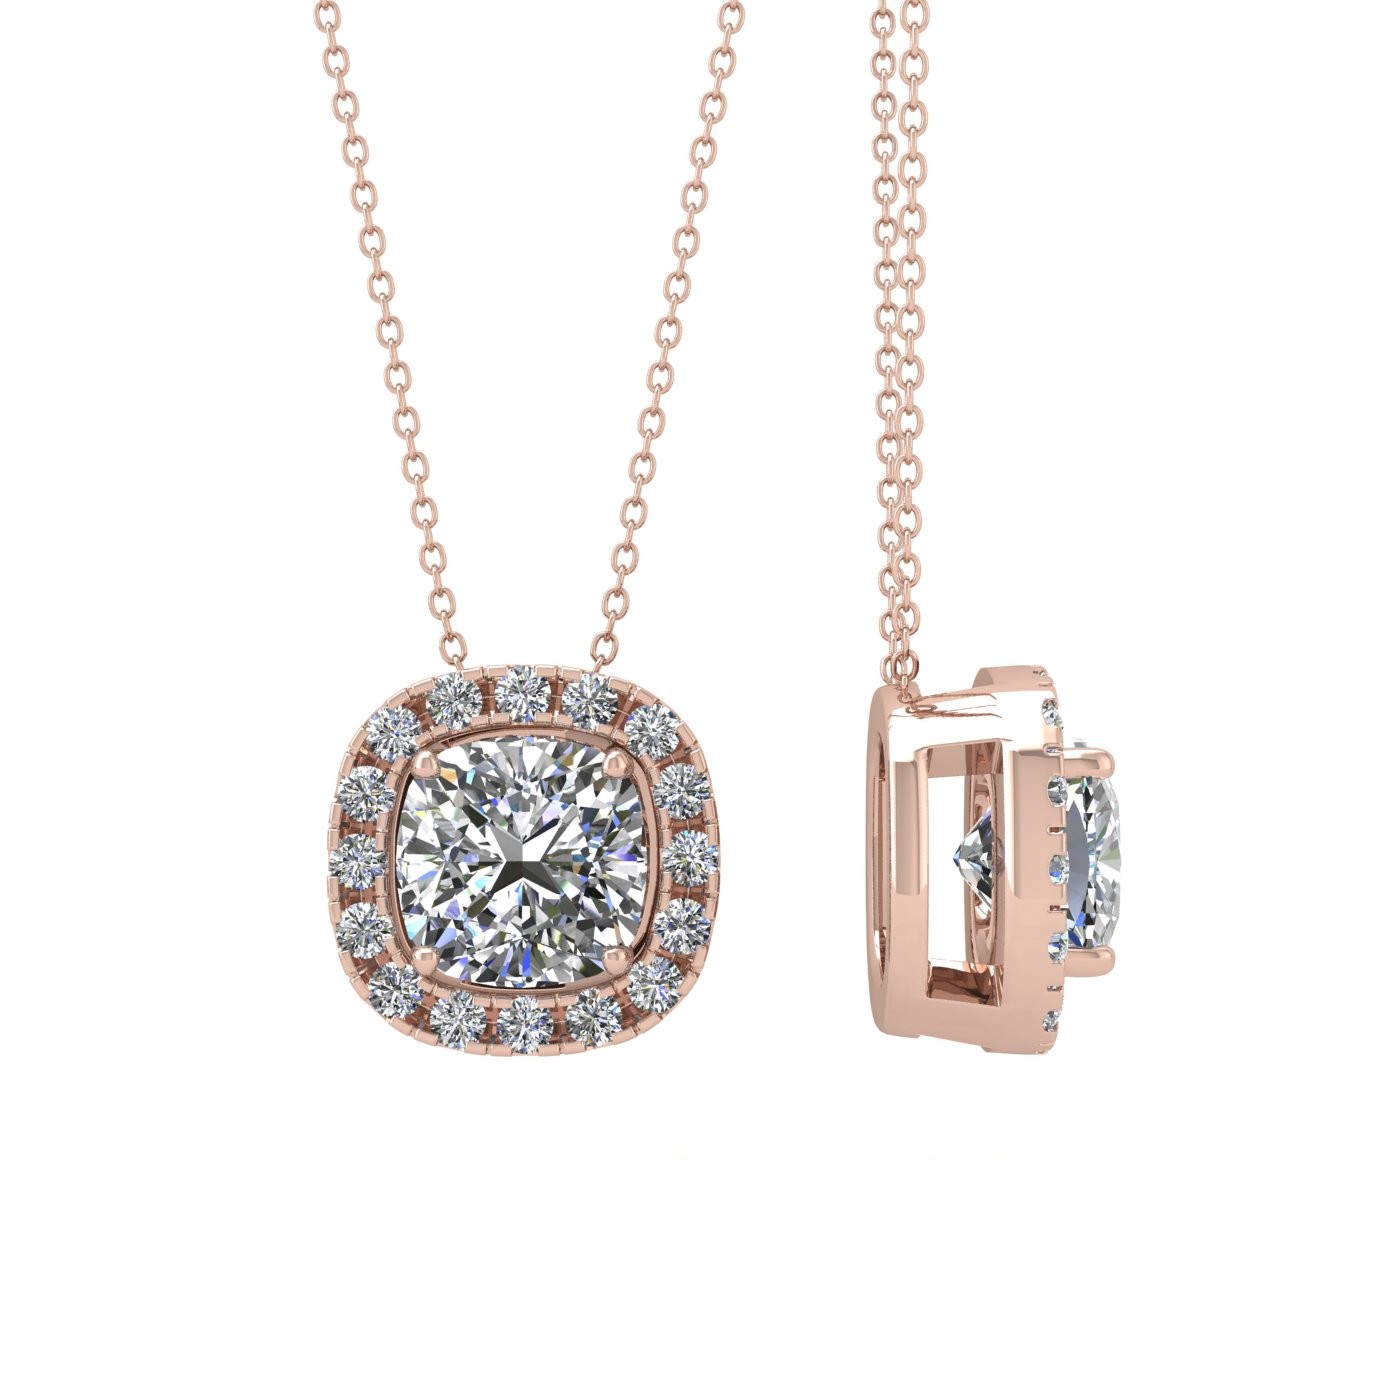 18k rose gold  2.5 ct 4 prongs cushion shape diamond pendant with diamond pavÉ set halo Photos & images